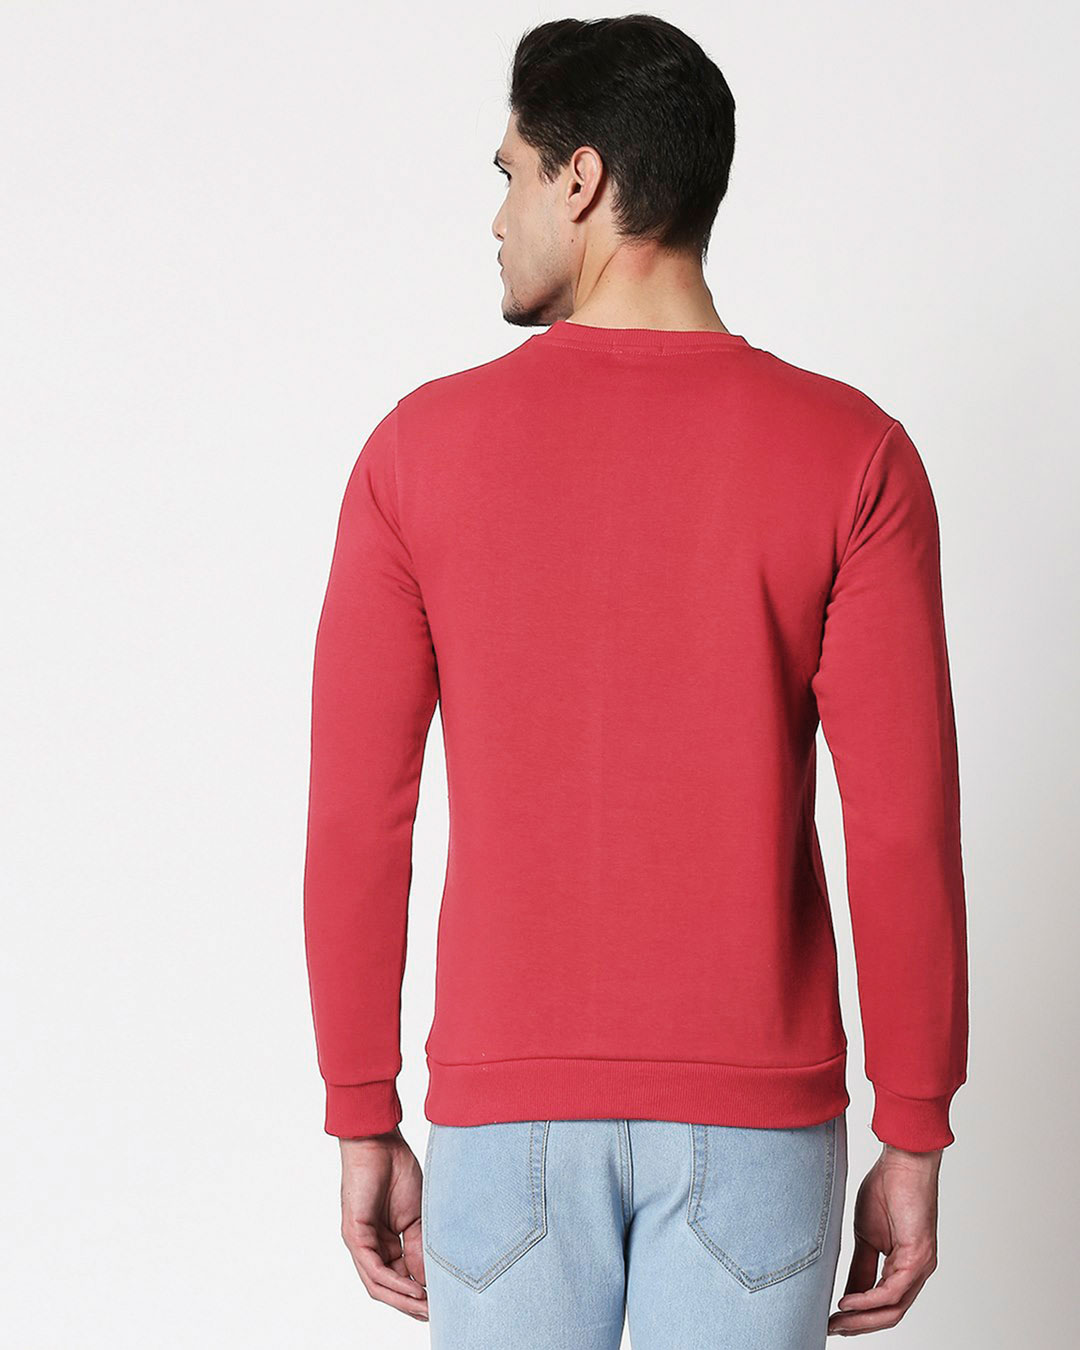 Shop Sadda Pain Fleece Sweatshirt Red Melange-Back